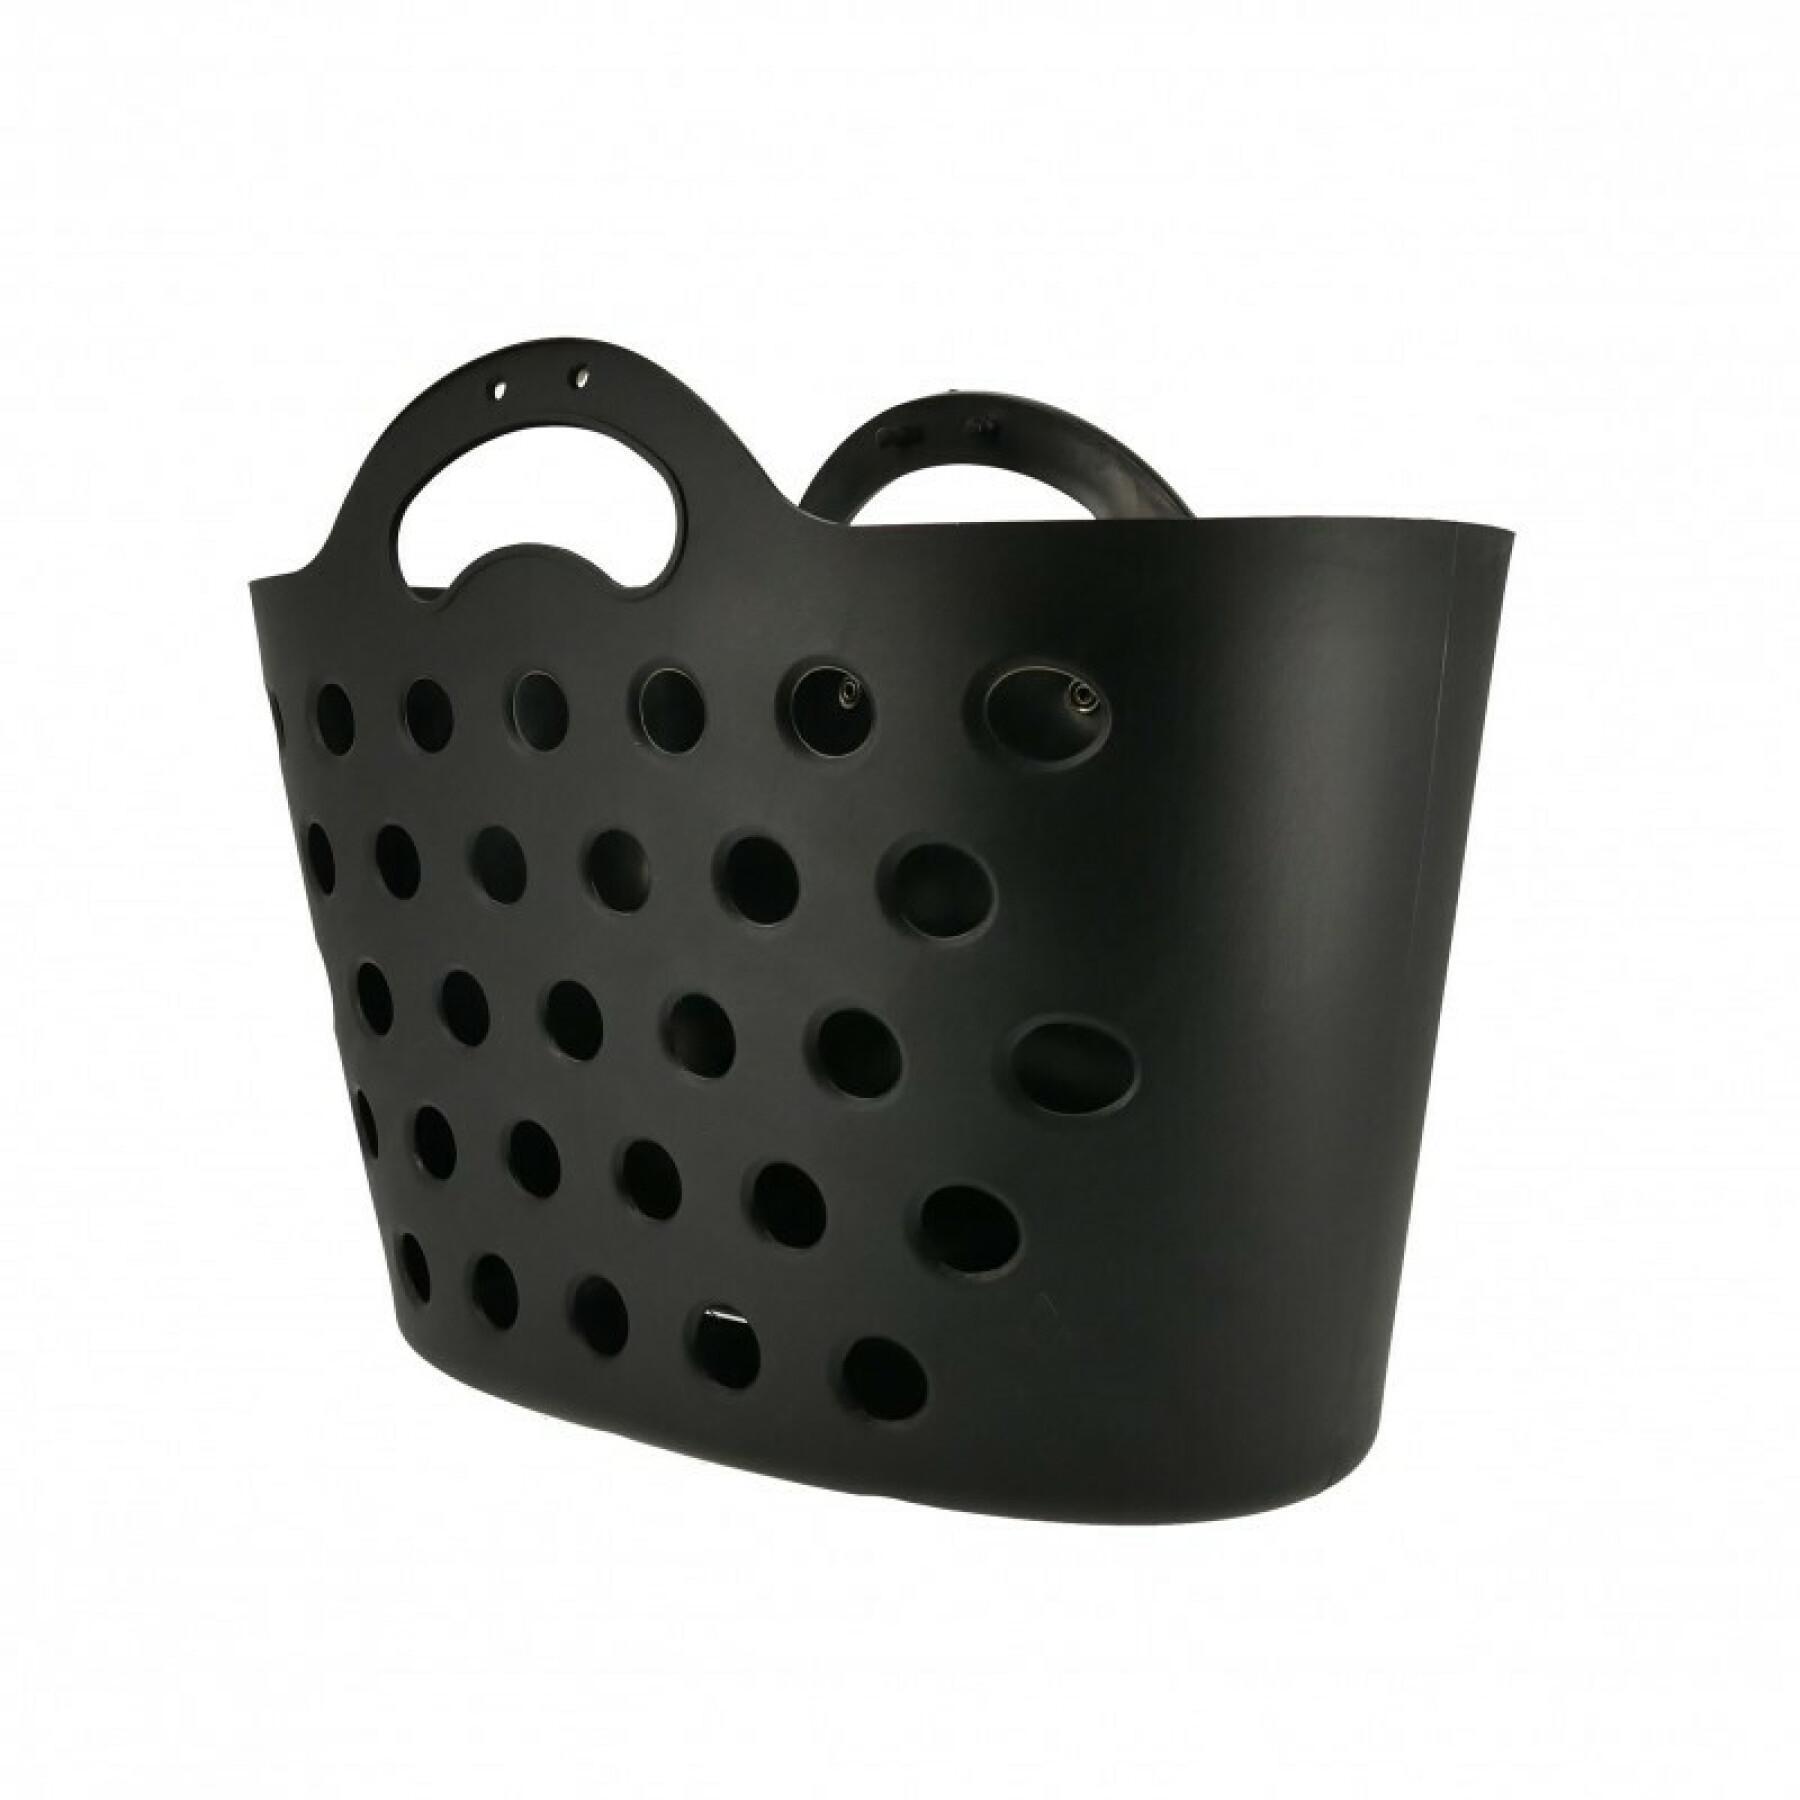 Trendy basket one luggage rack attachment Hapo-G